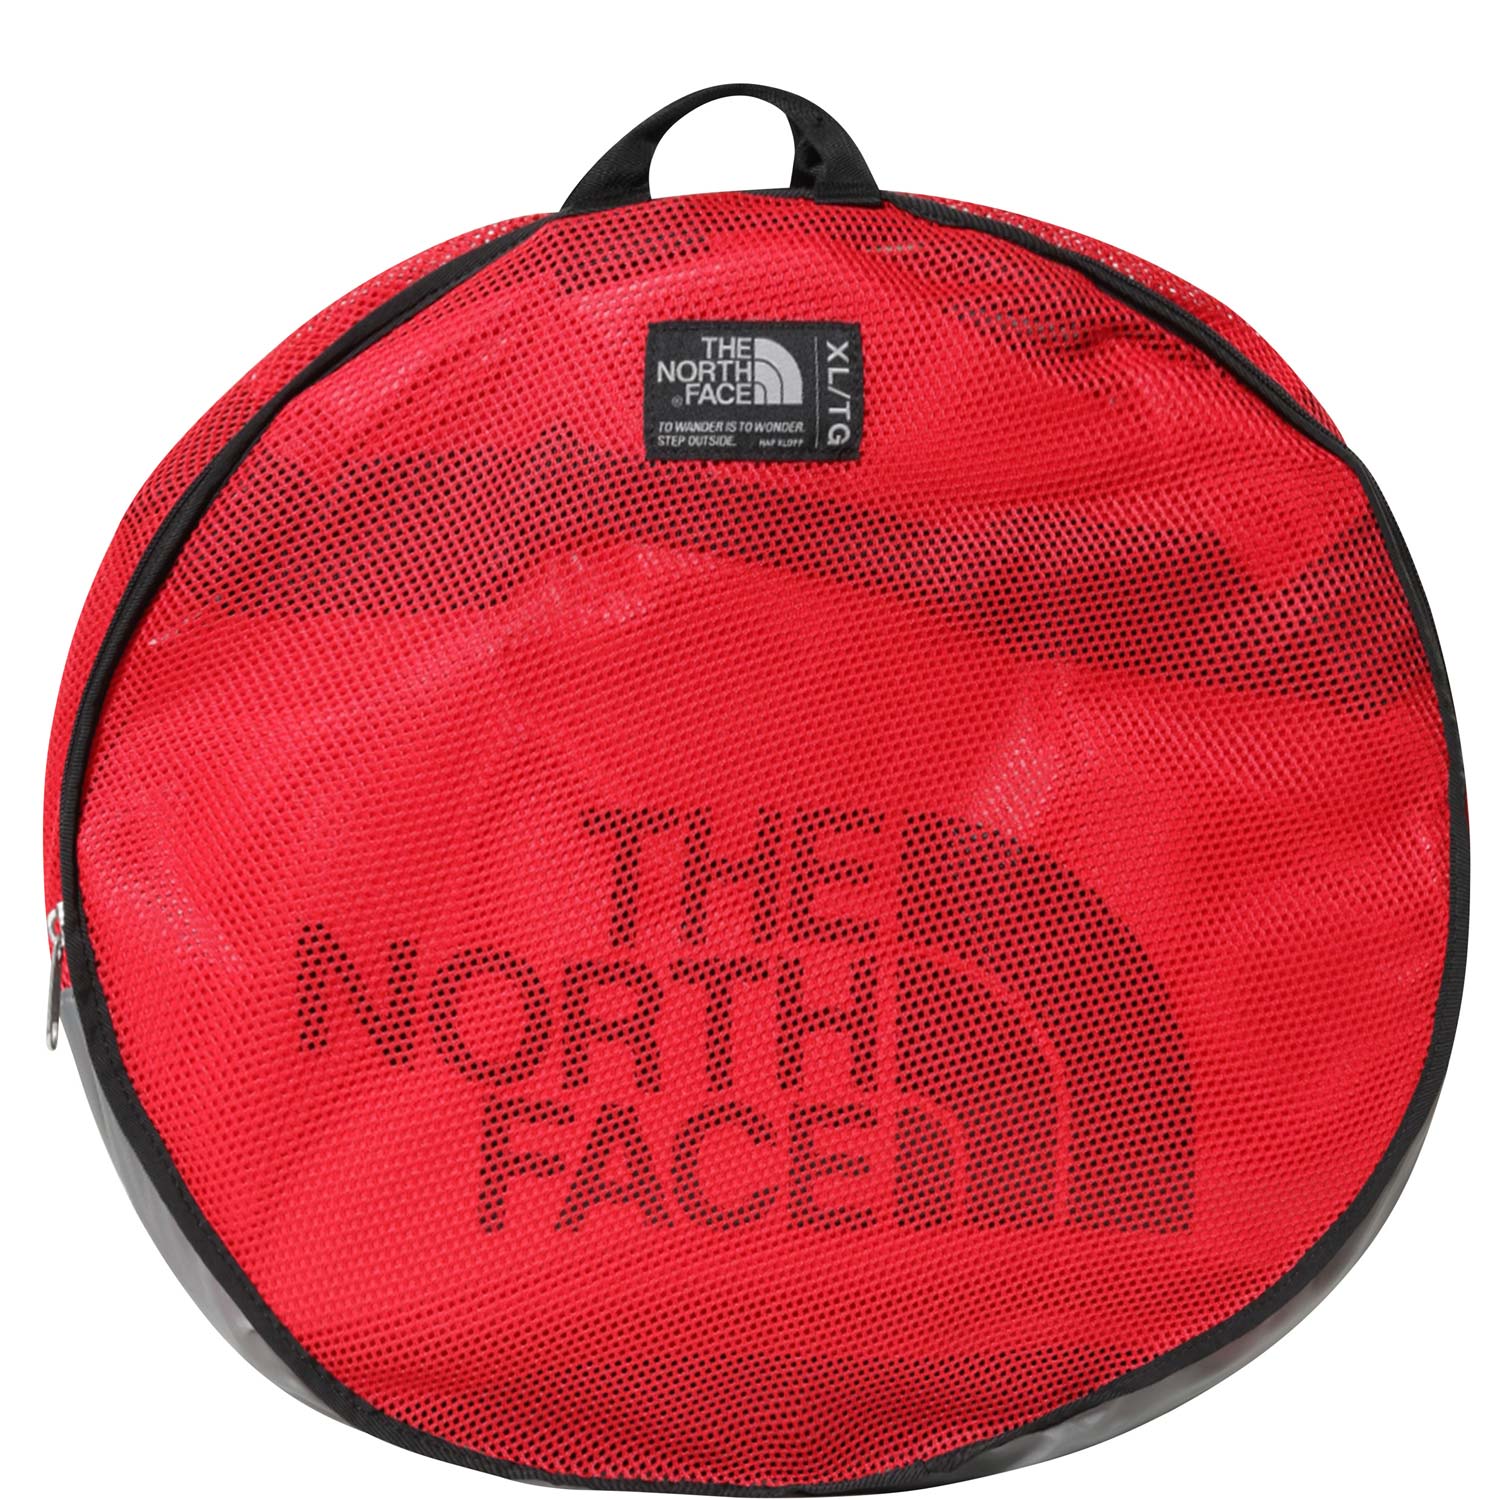 The North Face Reise/-Sporttasche Rucksack Base Camp Duffel XL Red/Black